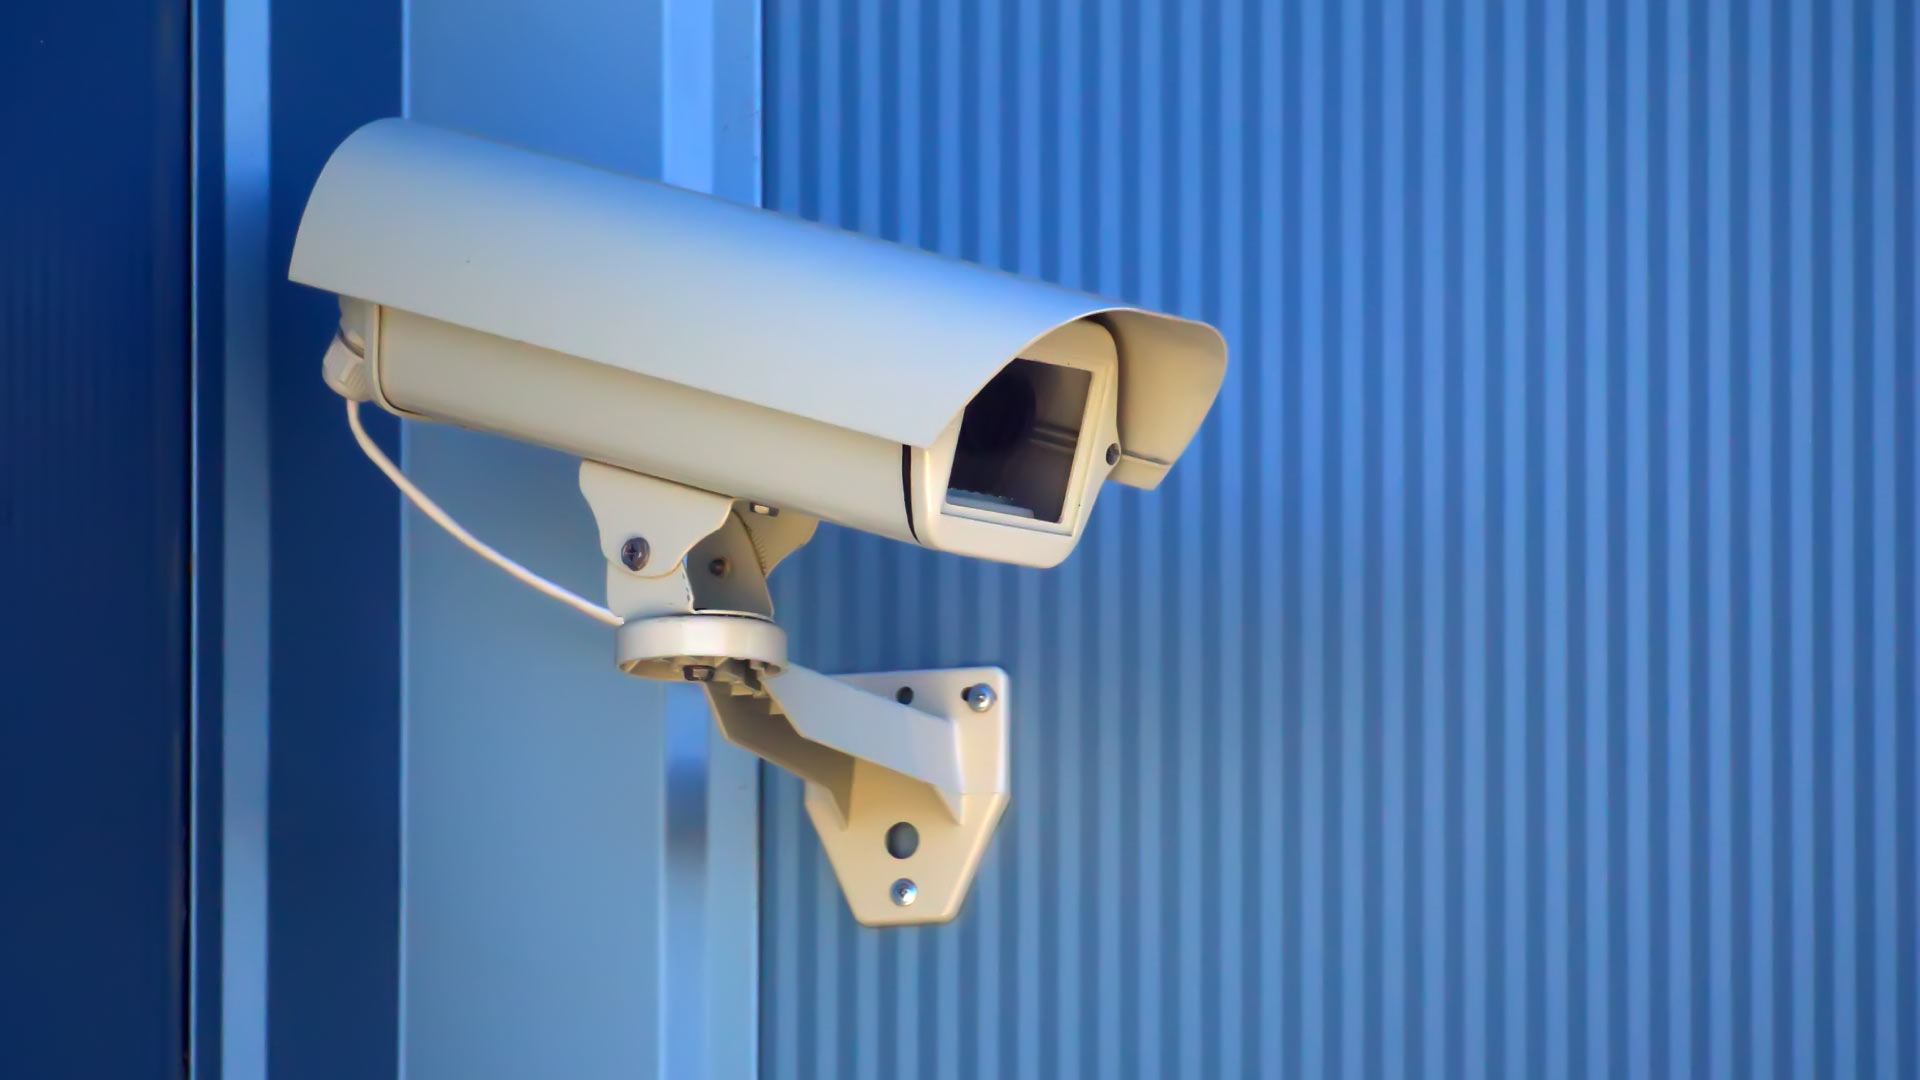 Secured 24 hrs video surveillance